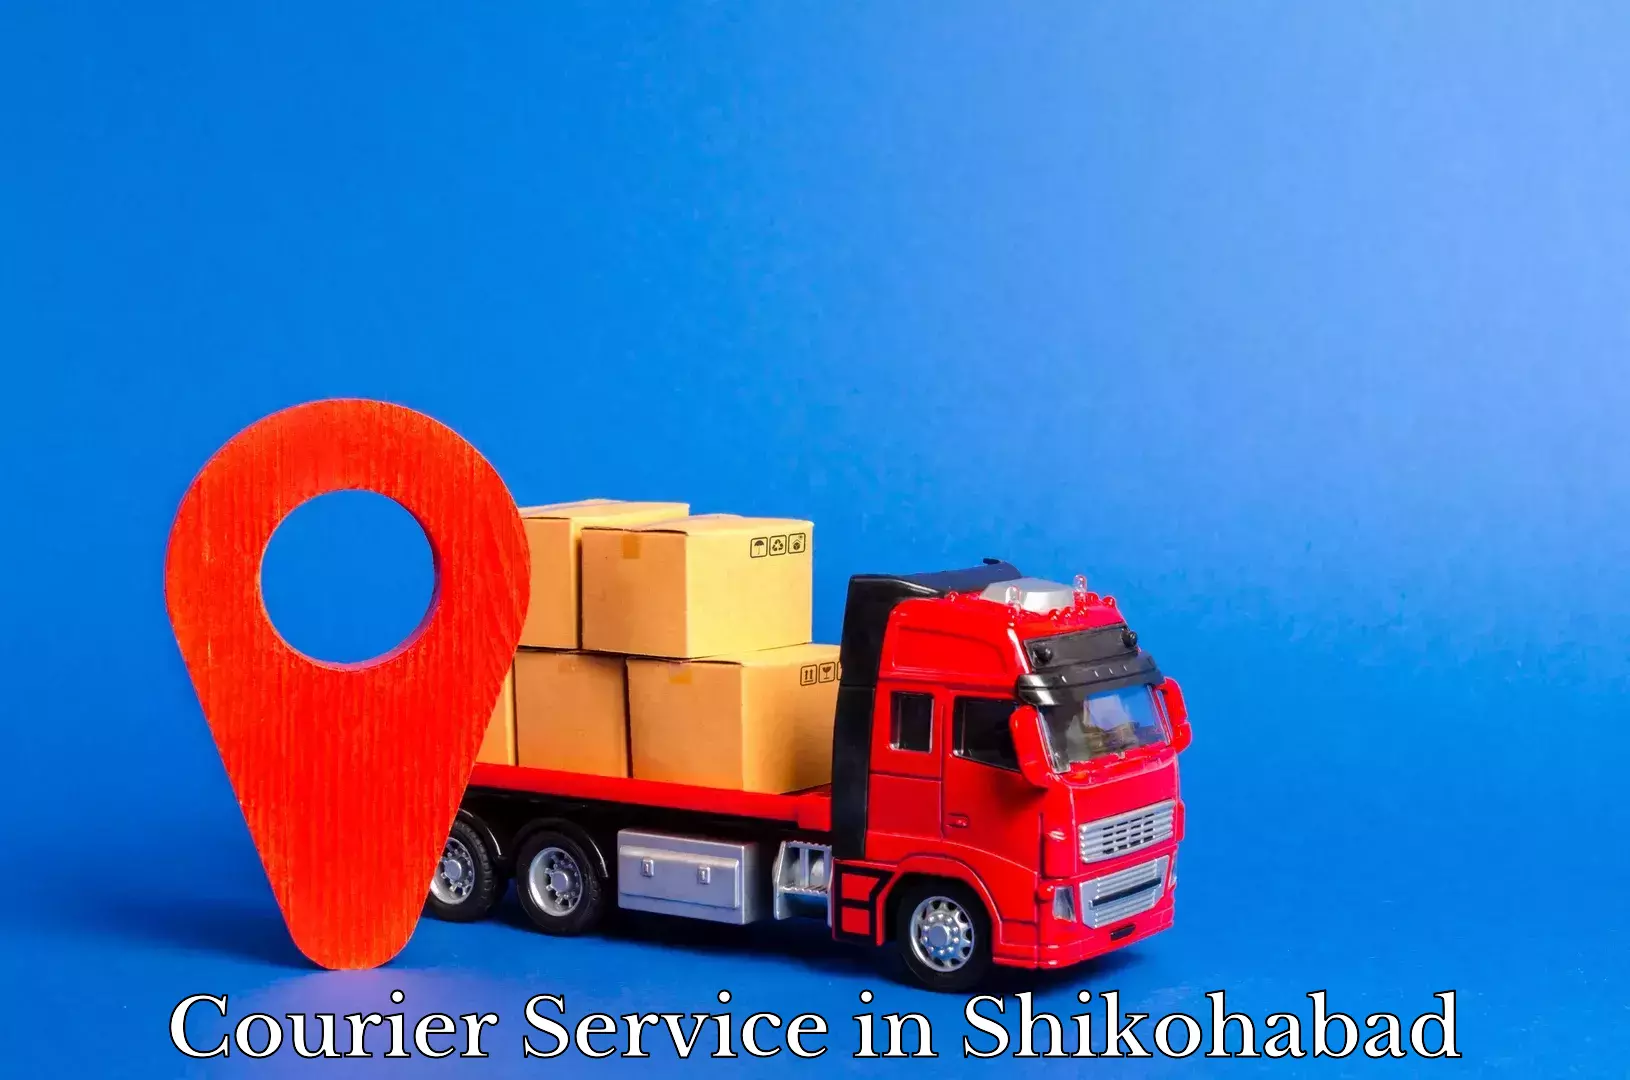 Supply chain efficiency in Shikohabad